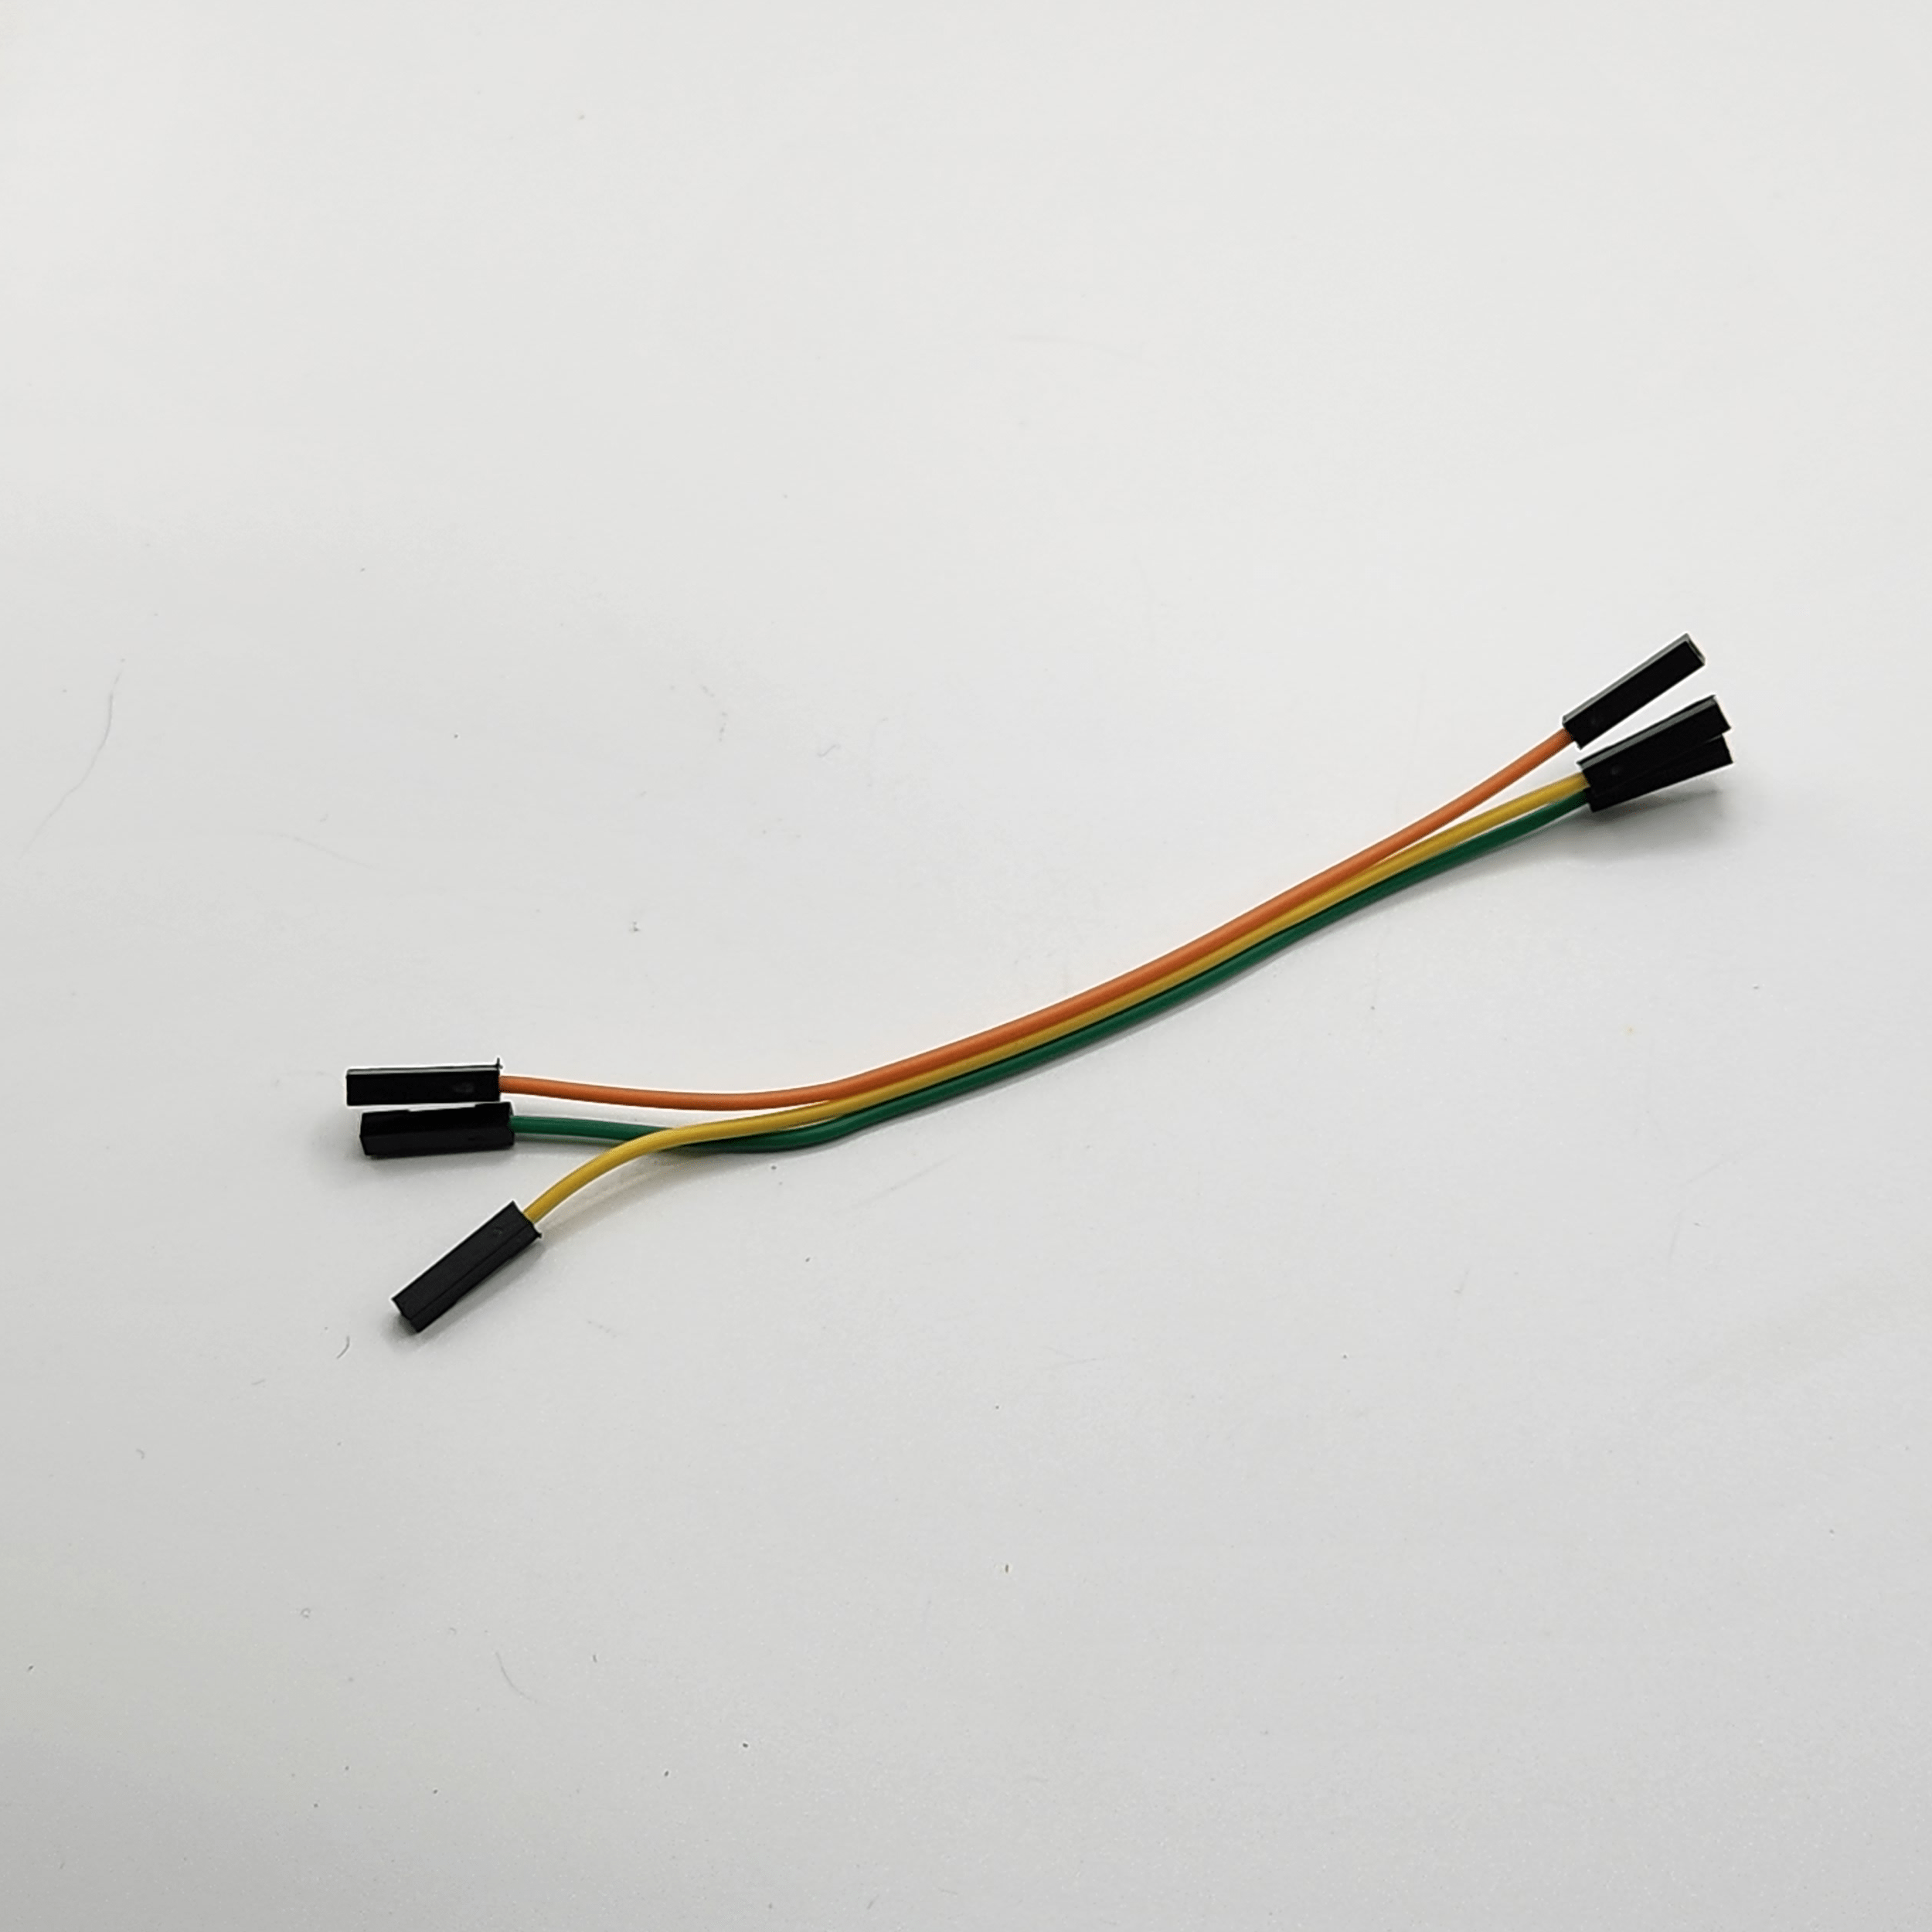 3 sort dupont wires